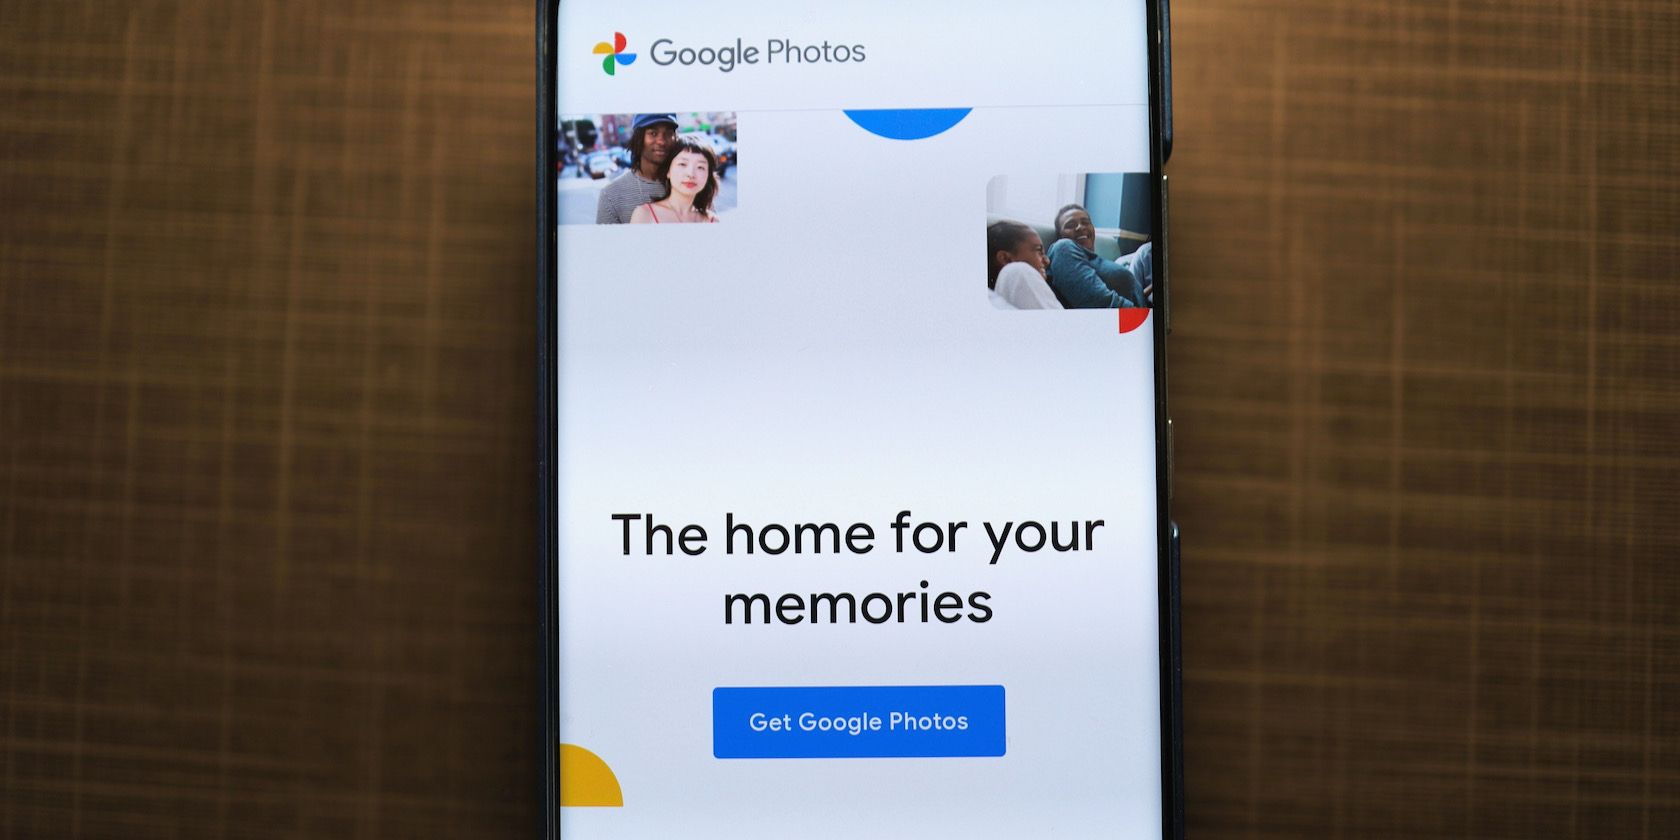 Google Photos featured